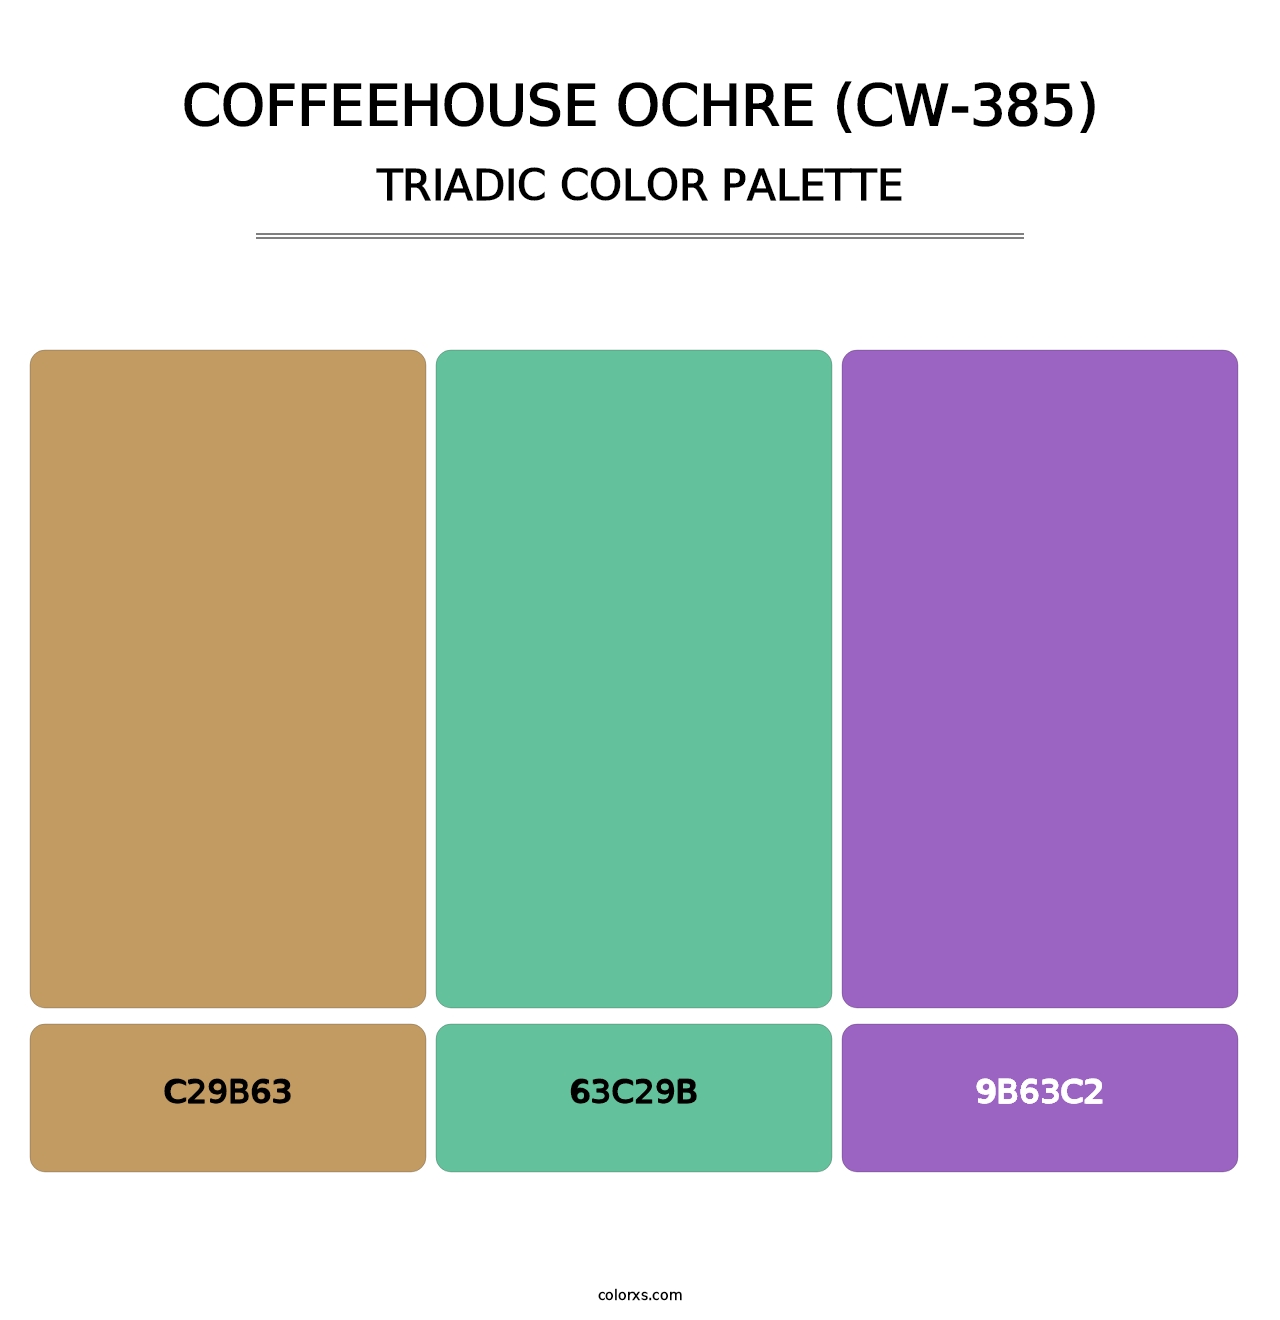 Coffeehouse Ochre (CW-385) - Triadic Color Palette